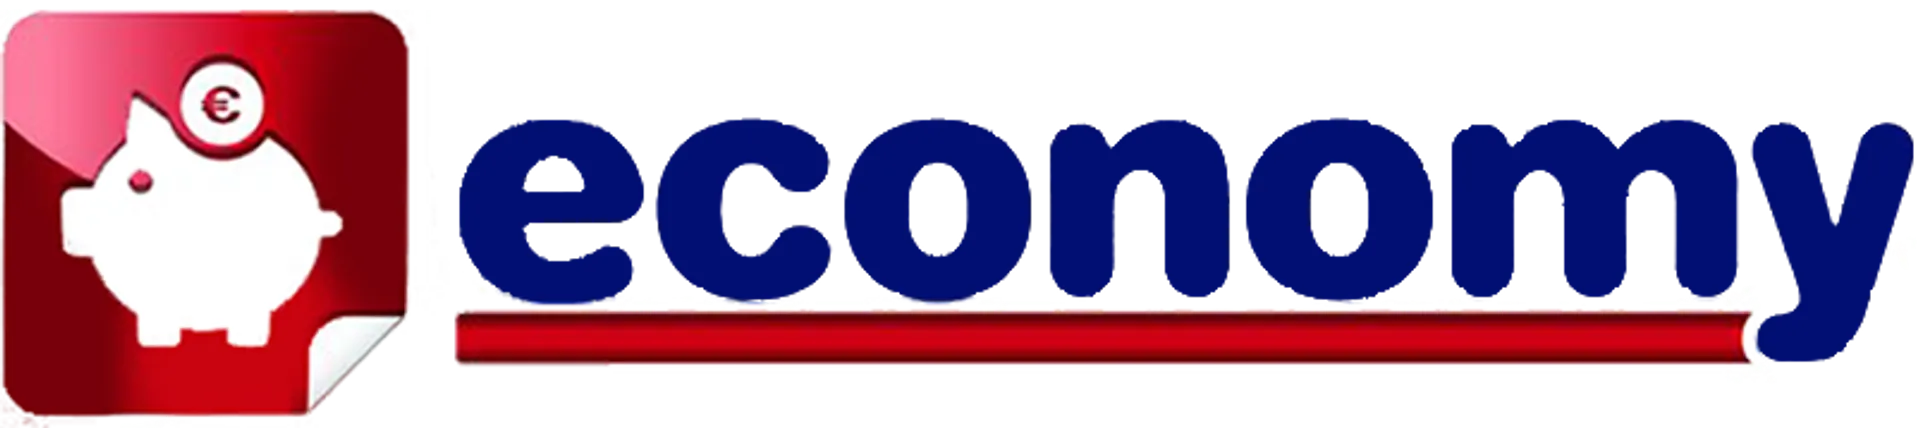 ECONOMY MARKET logo. Current weekly ad